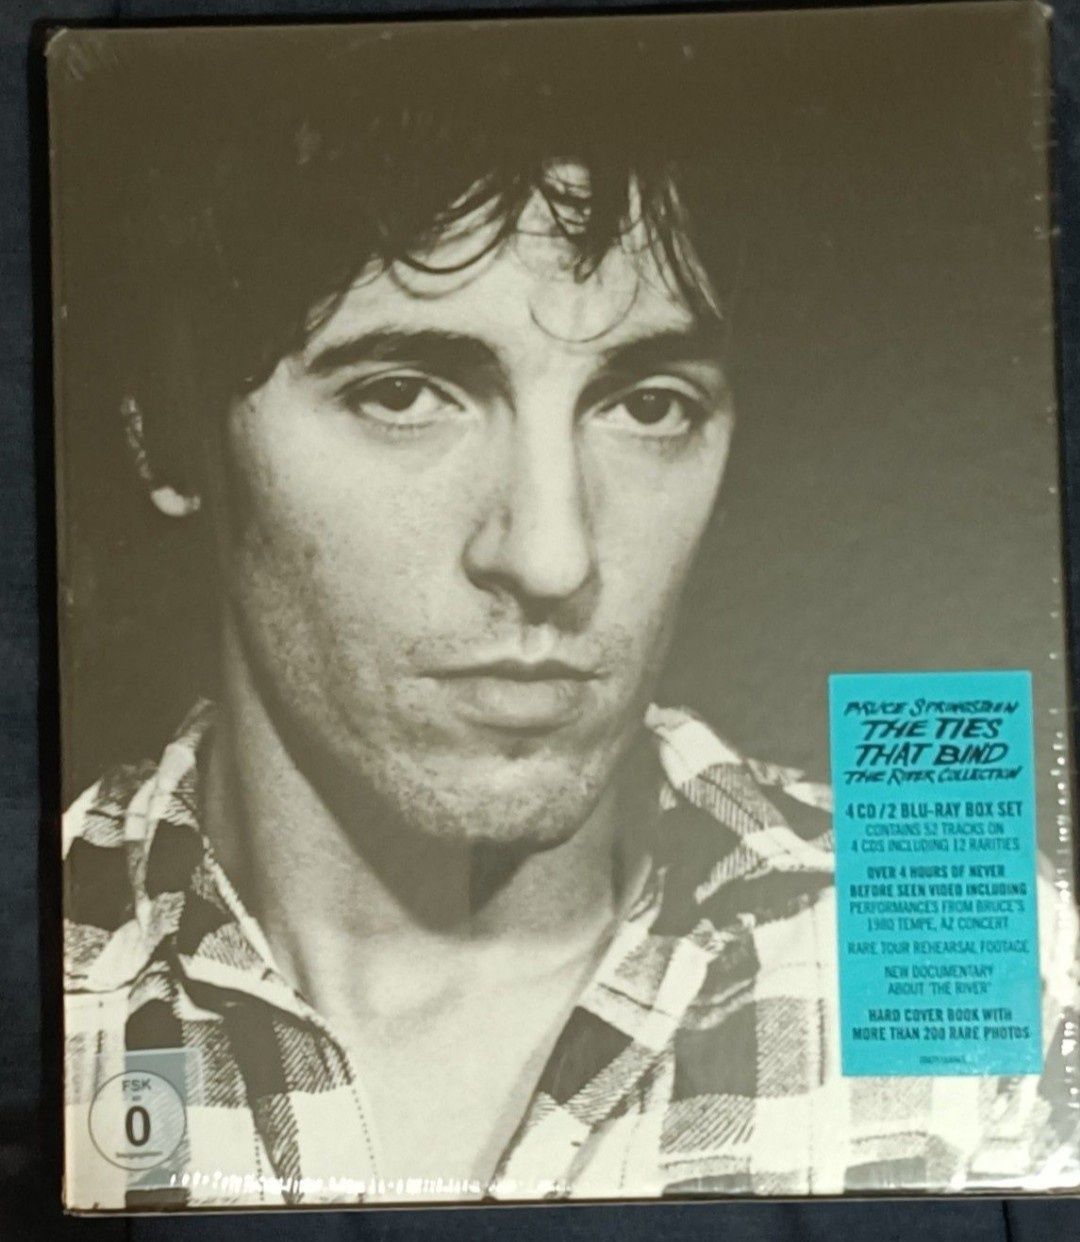 Bruce Springsteen "The River Box" 4CDs+2Blu-ray+book " RARO